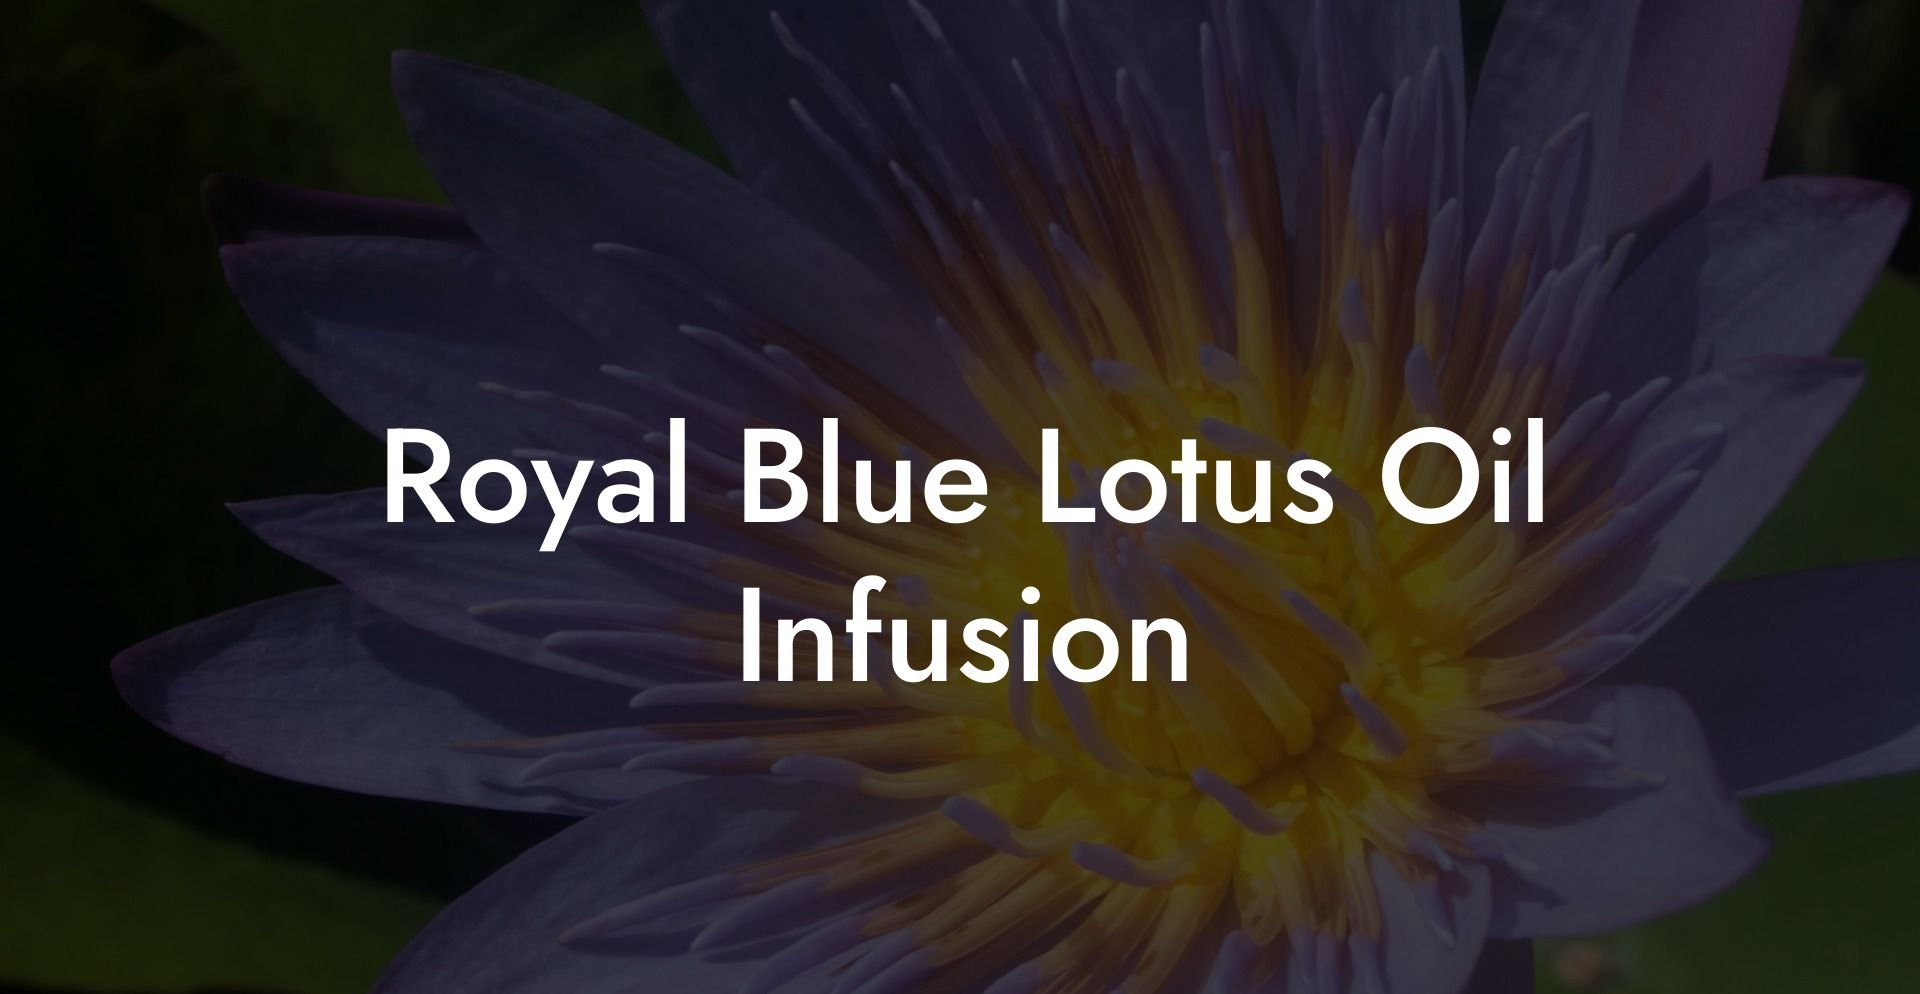 Royal Blue Lotus Oil Infusion